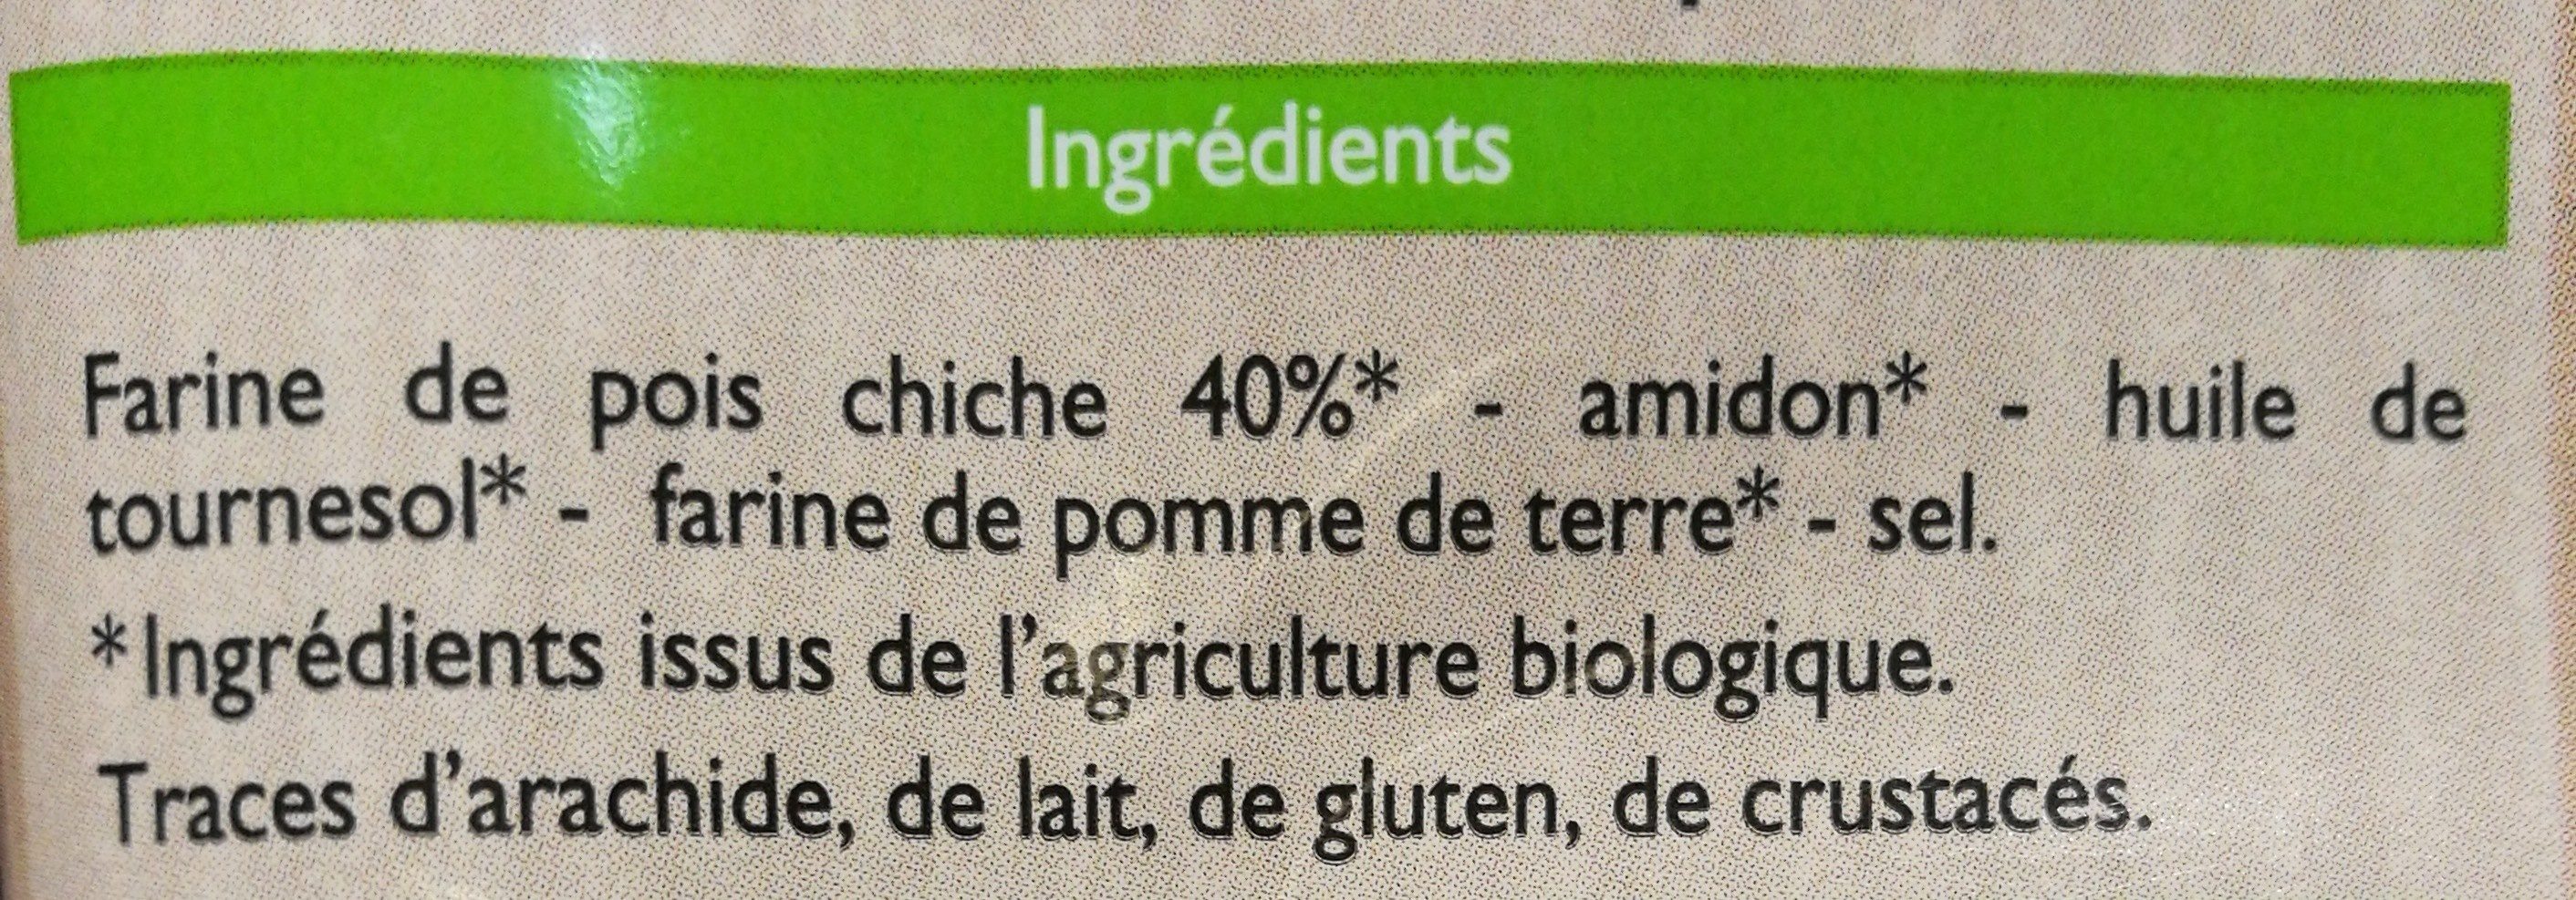 Snack au pois chiches - Ingredients - fr